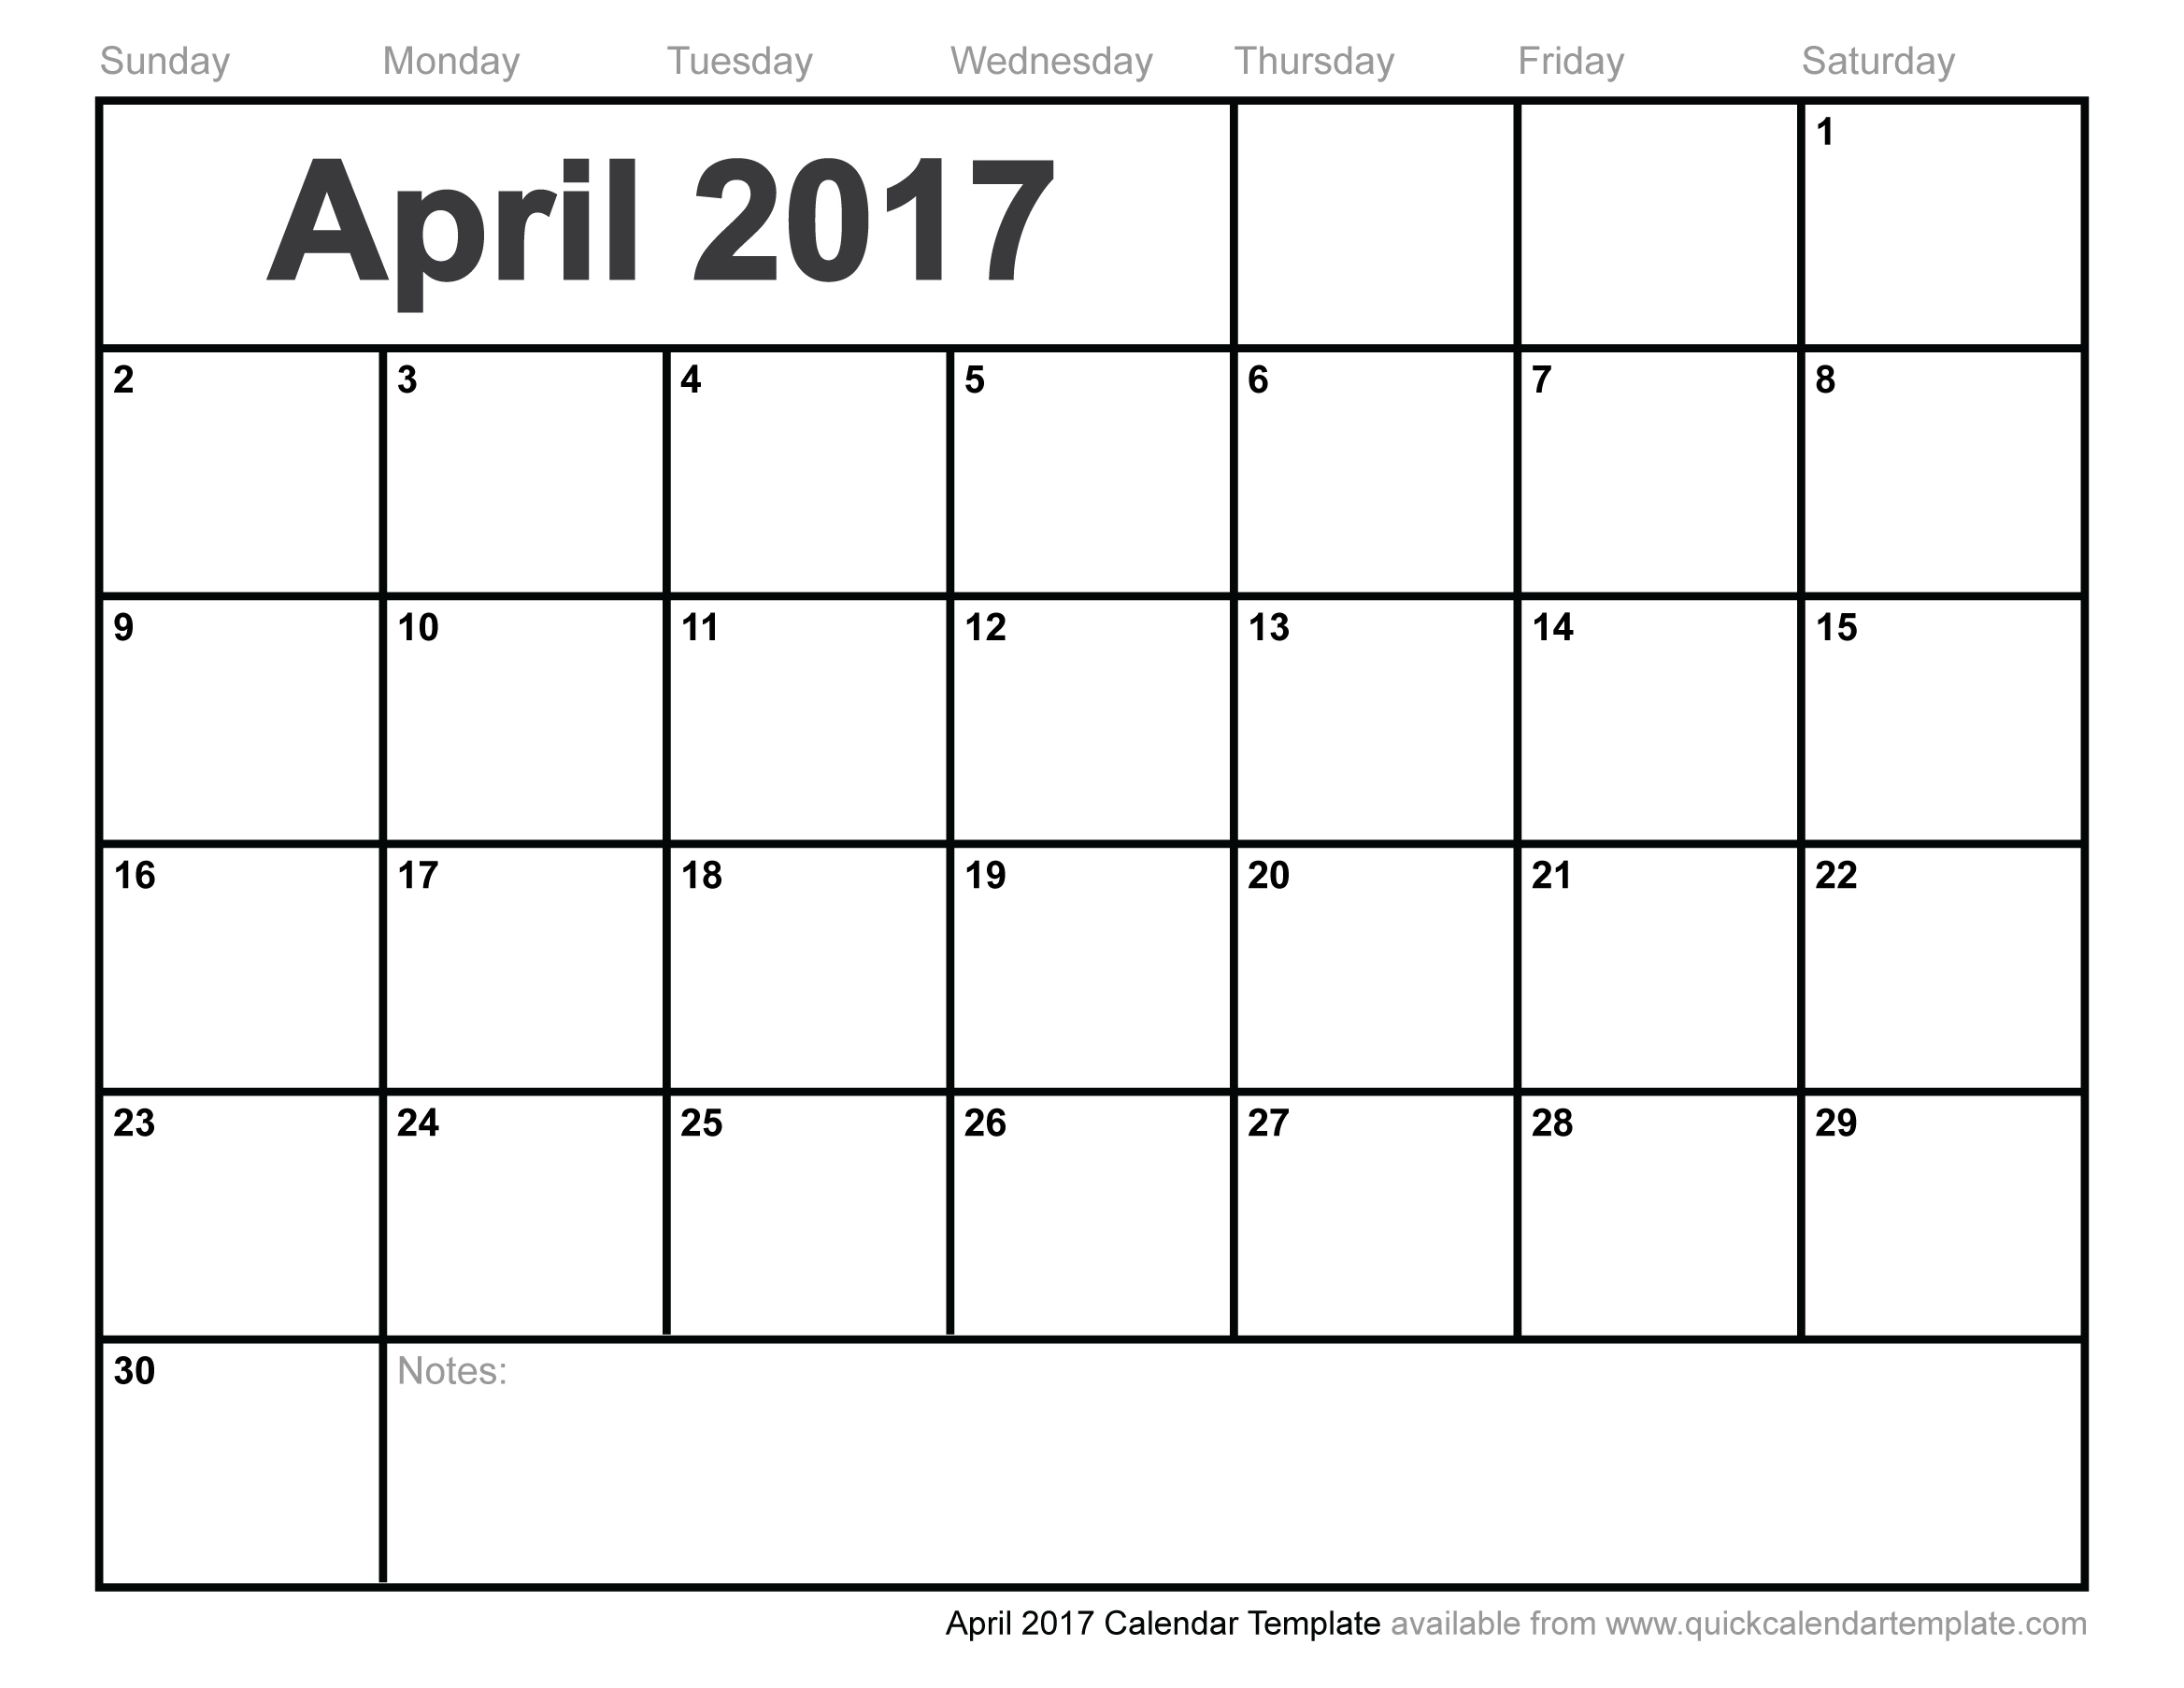 April 2017 Calendars for Word, Excel & PDF